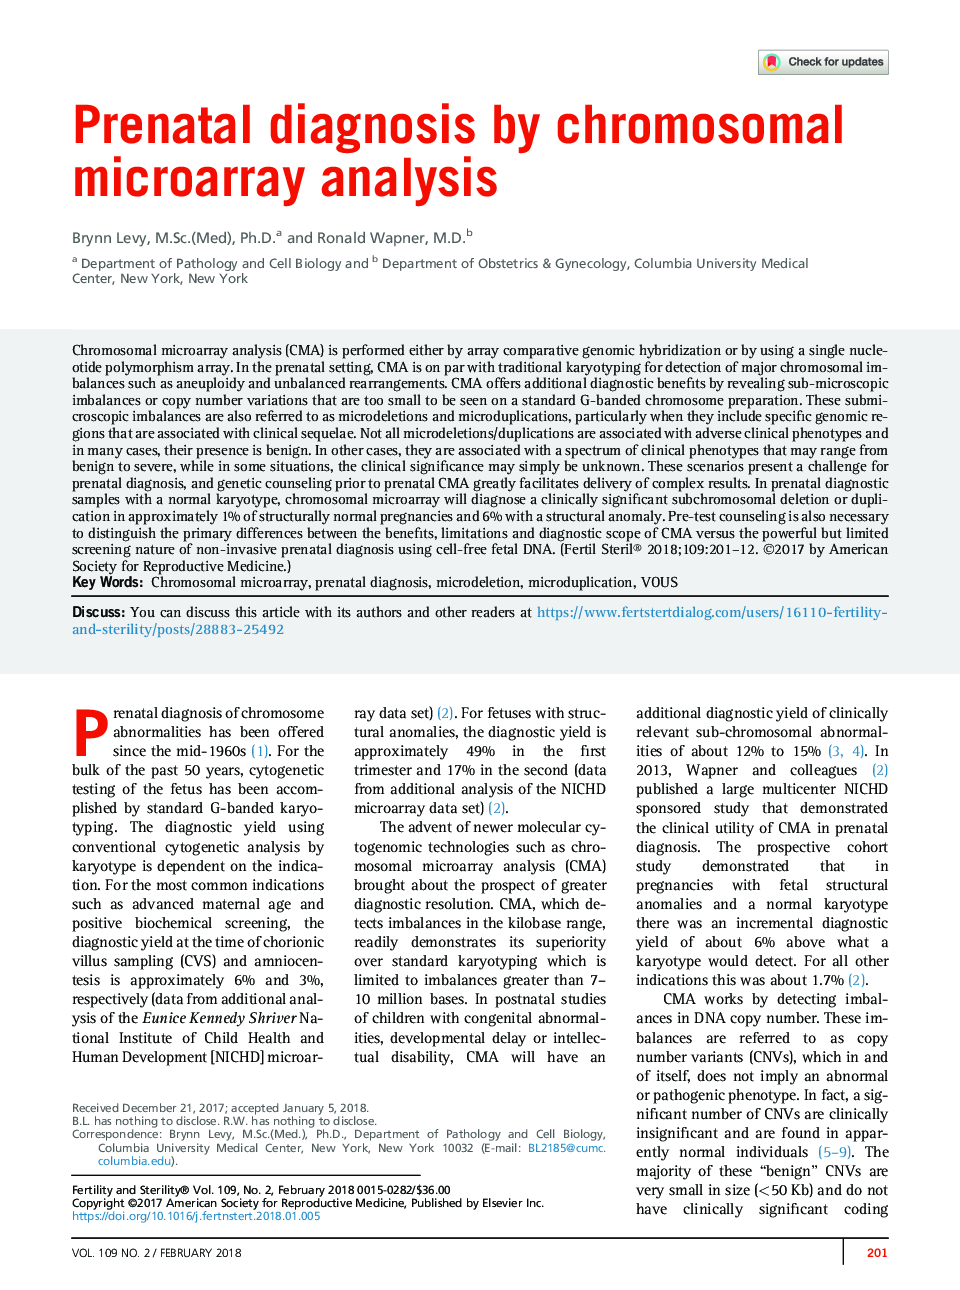 Prenatal diagnosis by chromosomal microarray analysis